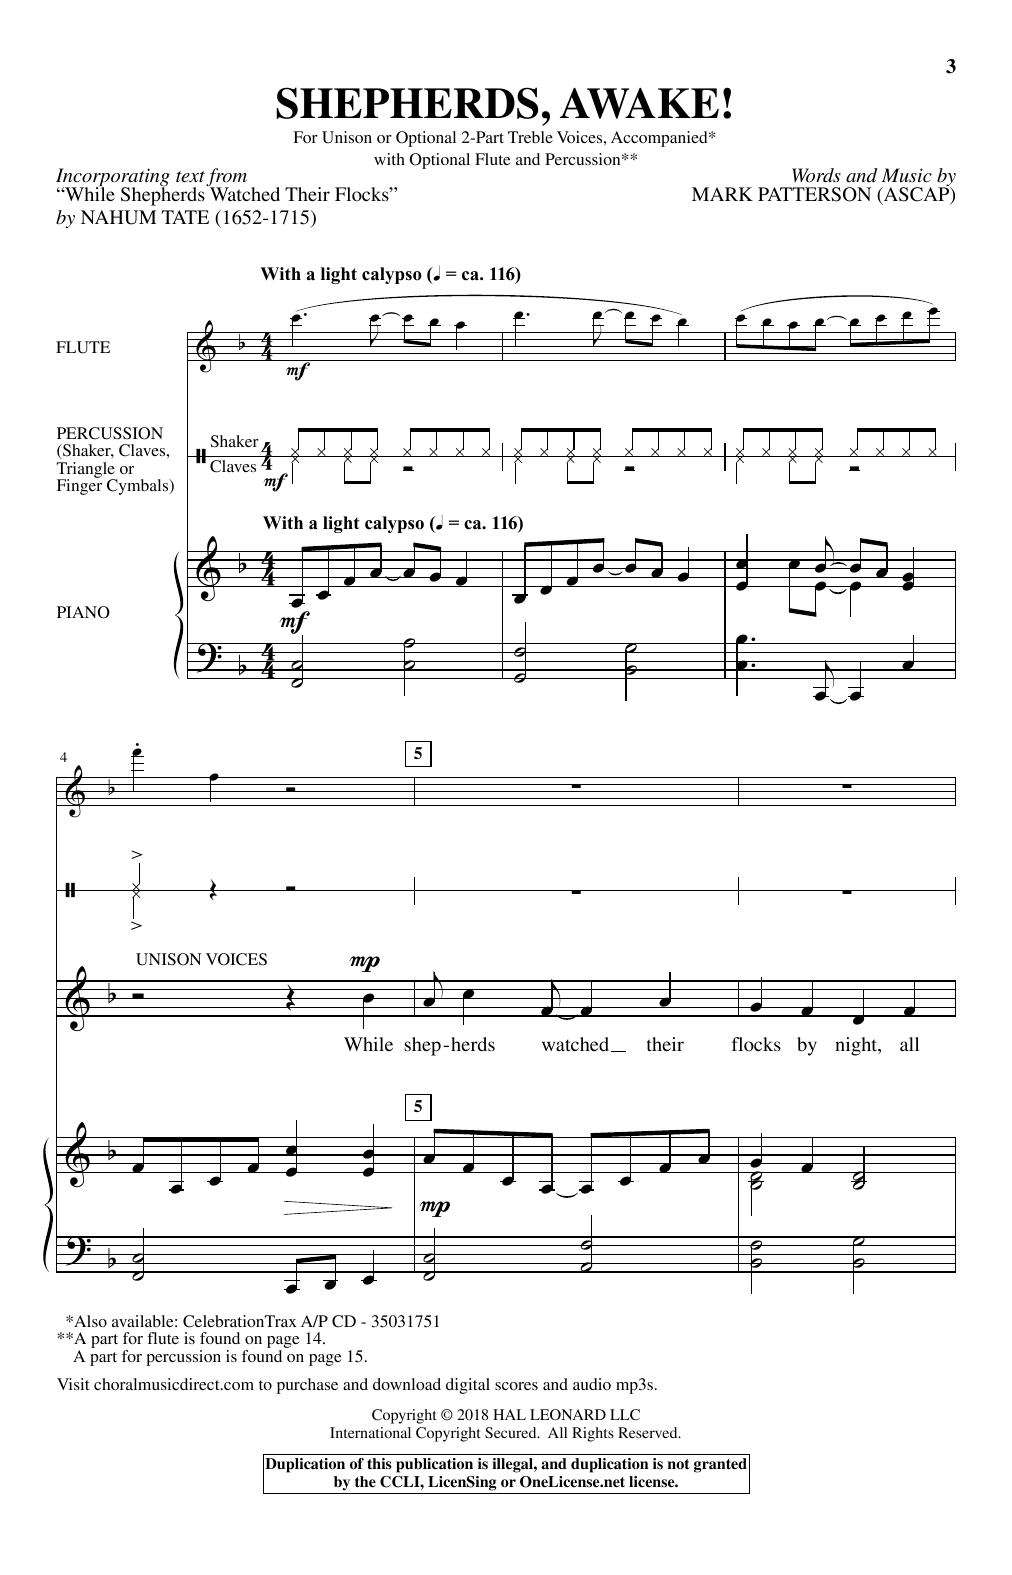 Mark Patterson Shepherds. Awake! Sheet Music Notes & Chords for Unison Choral - Download or Print PDF